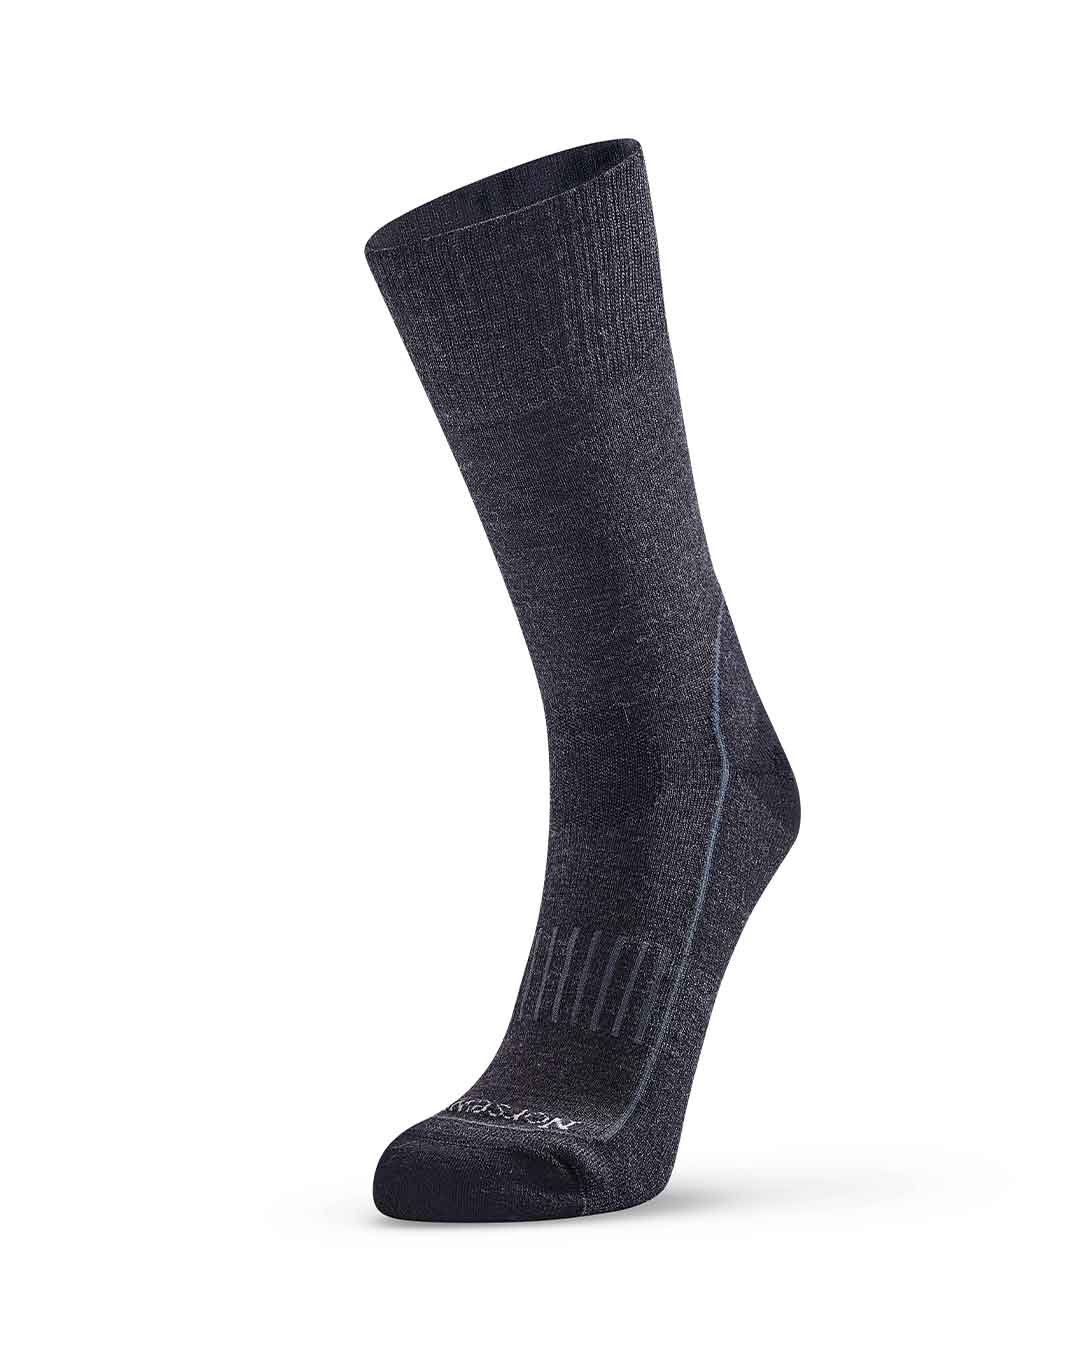 Adventurer Micro Crew Socks - Charcoal with Dark Grey trim